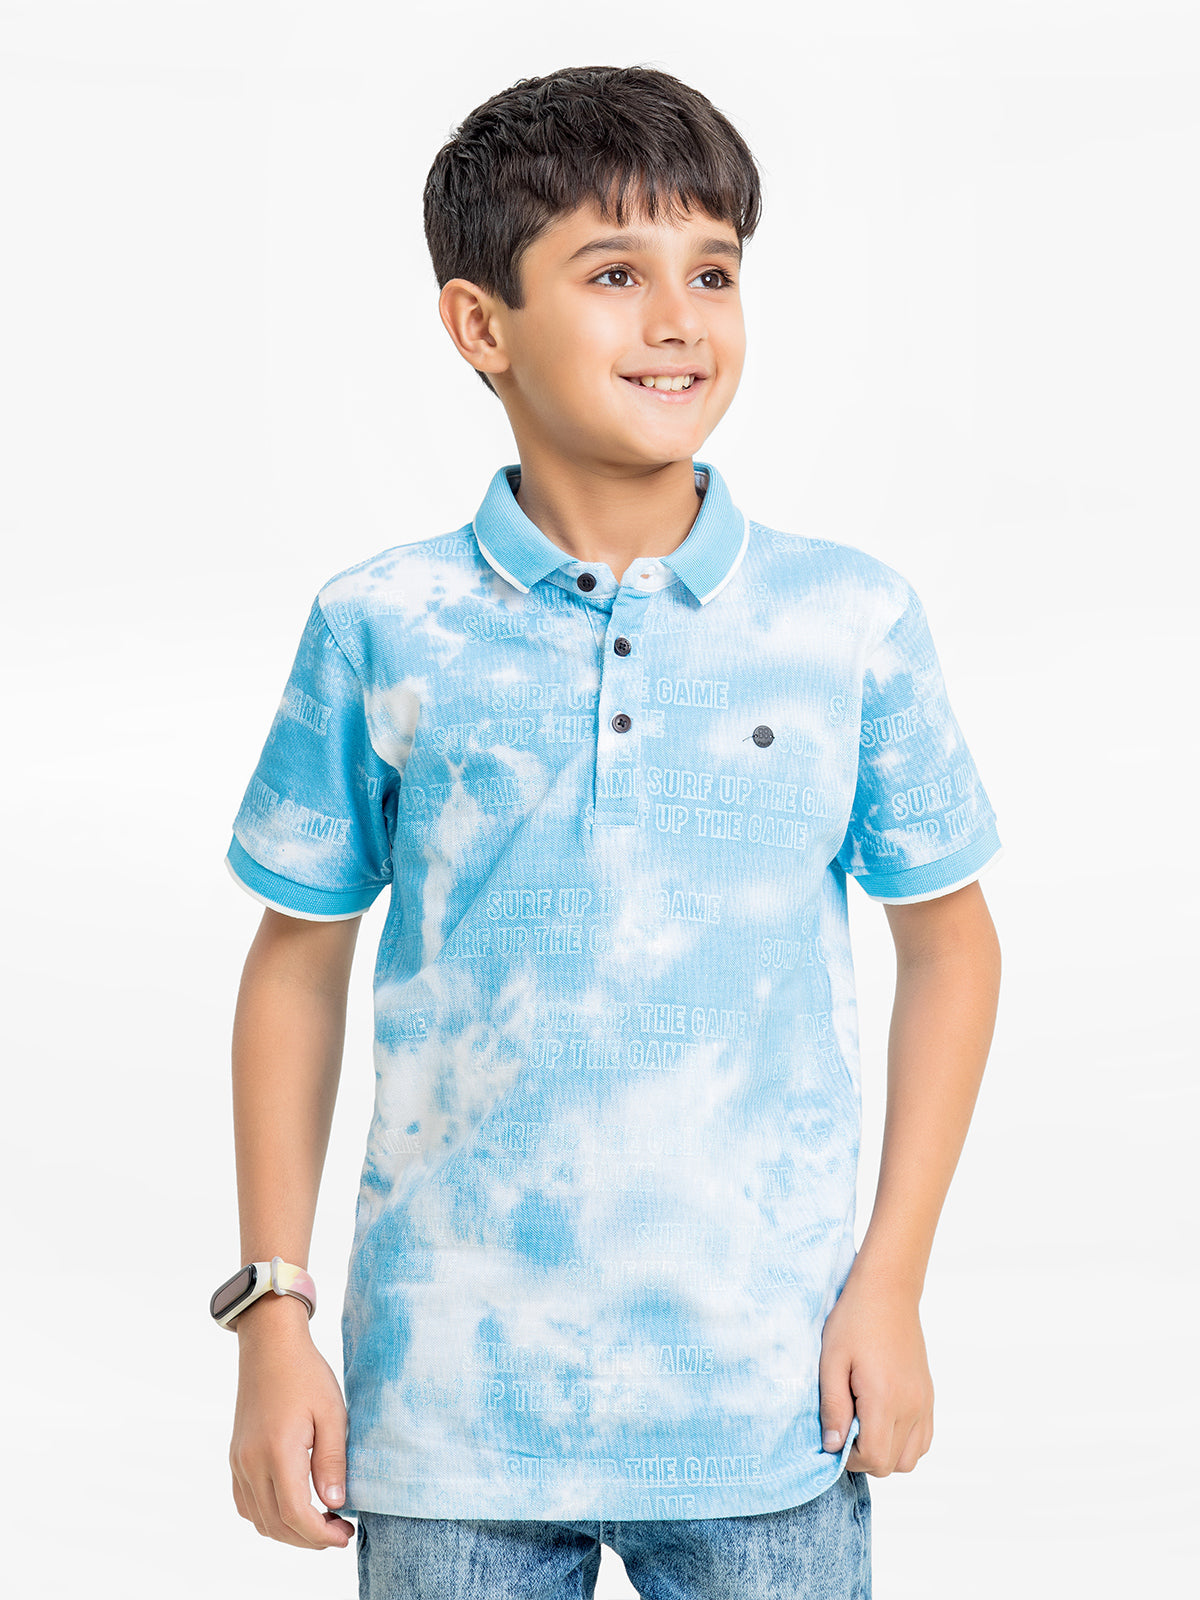 Boy's Sky Blue Polo Shirt - EBTPS24-004